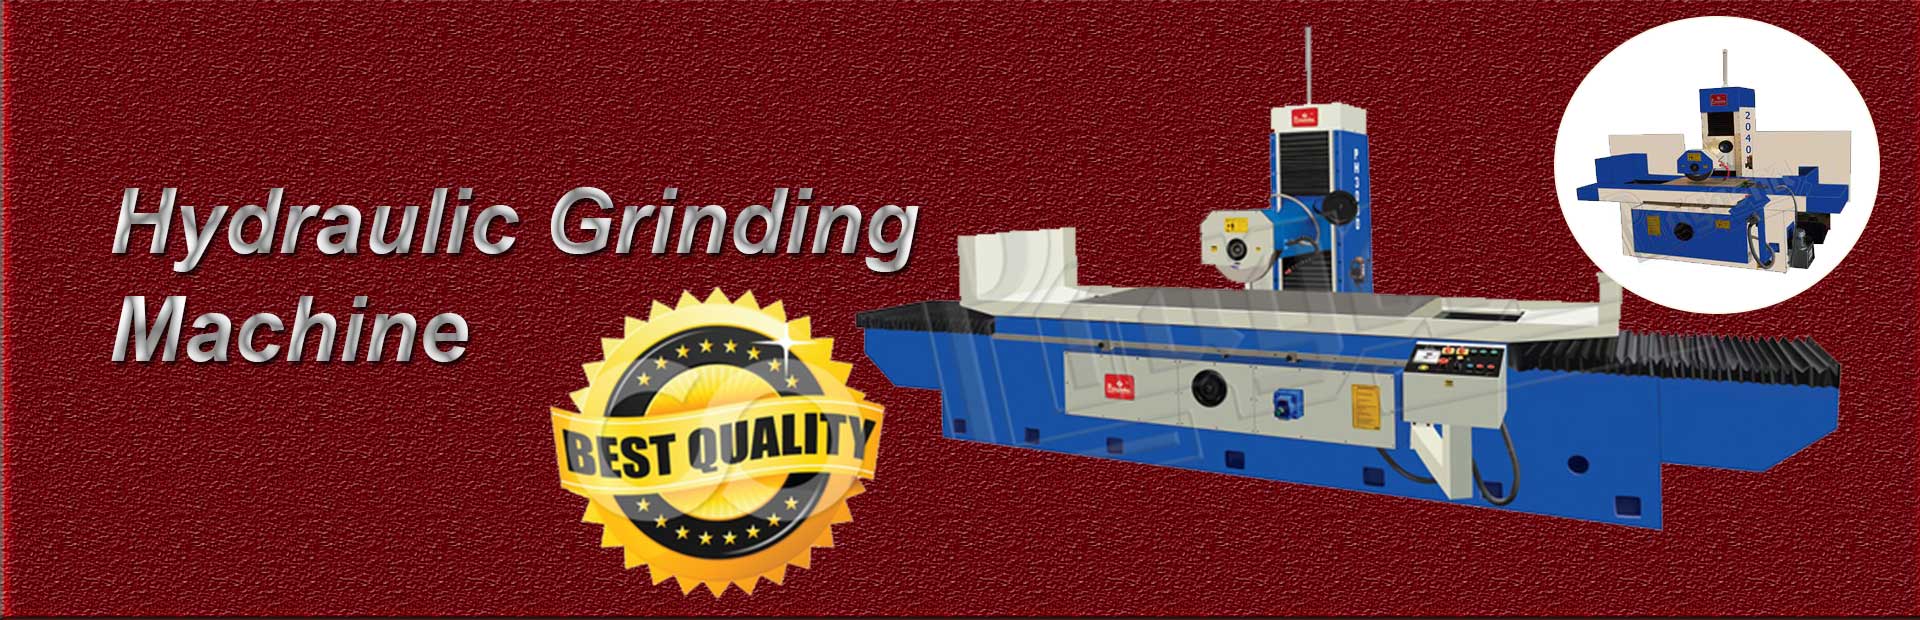 Hydraulic Grinding machine manufacturer, Supplier in India